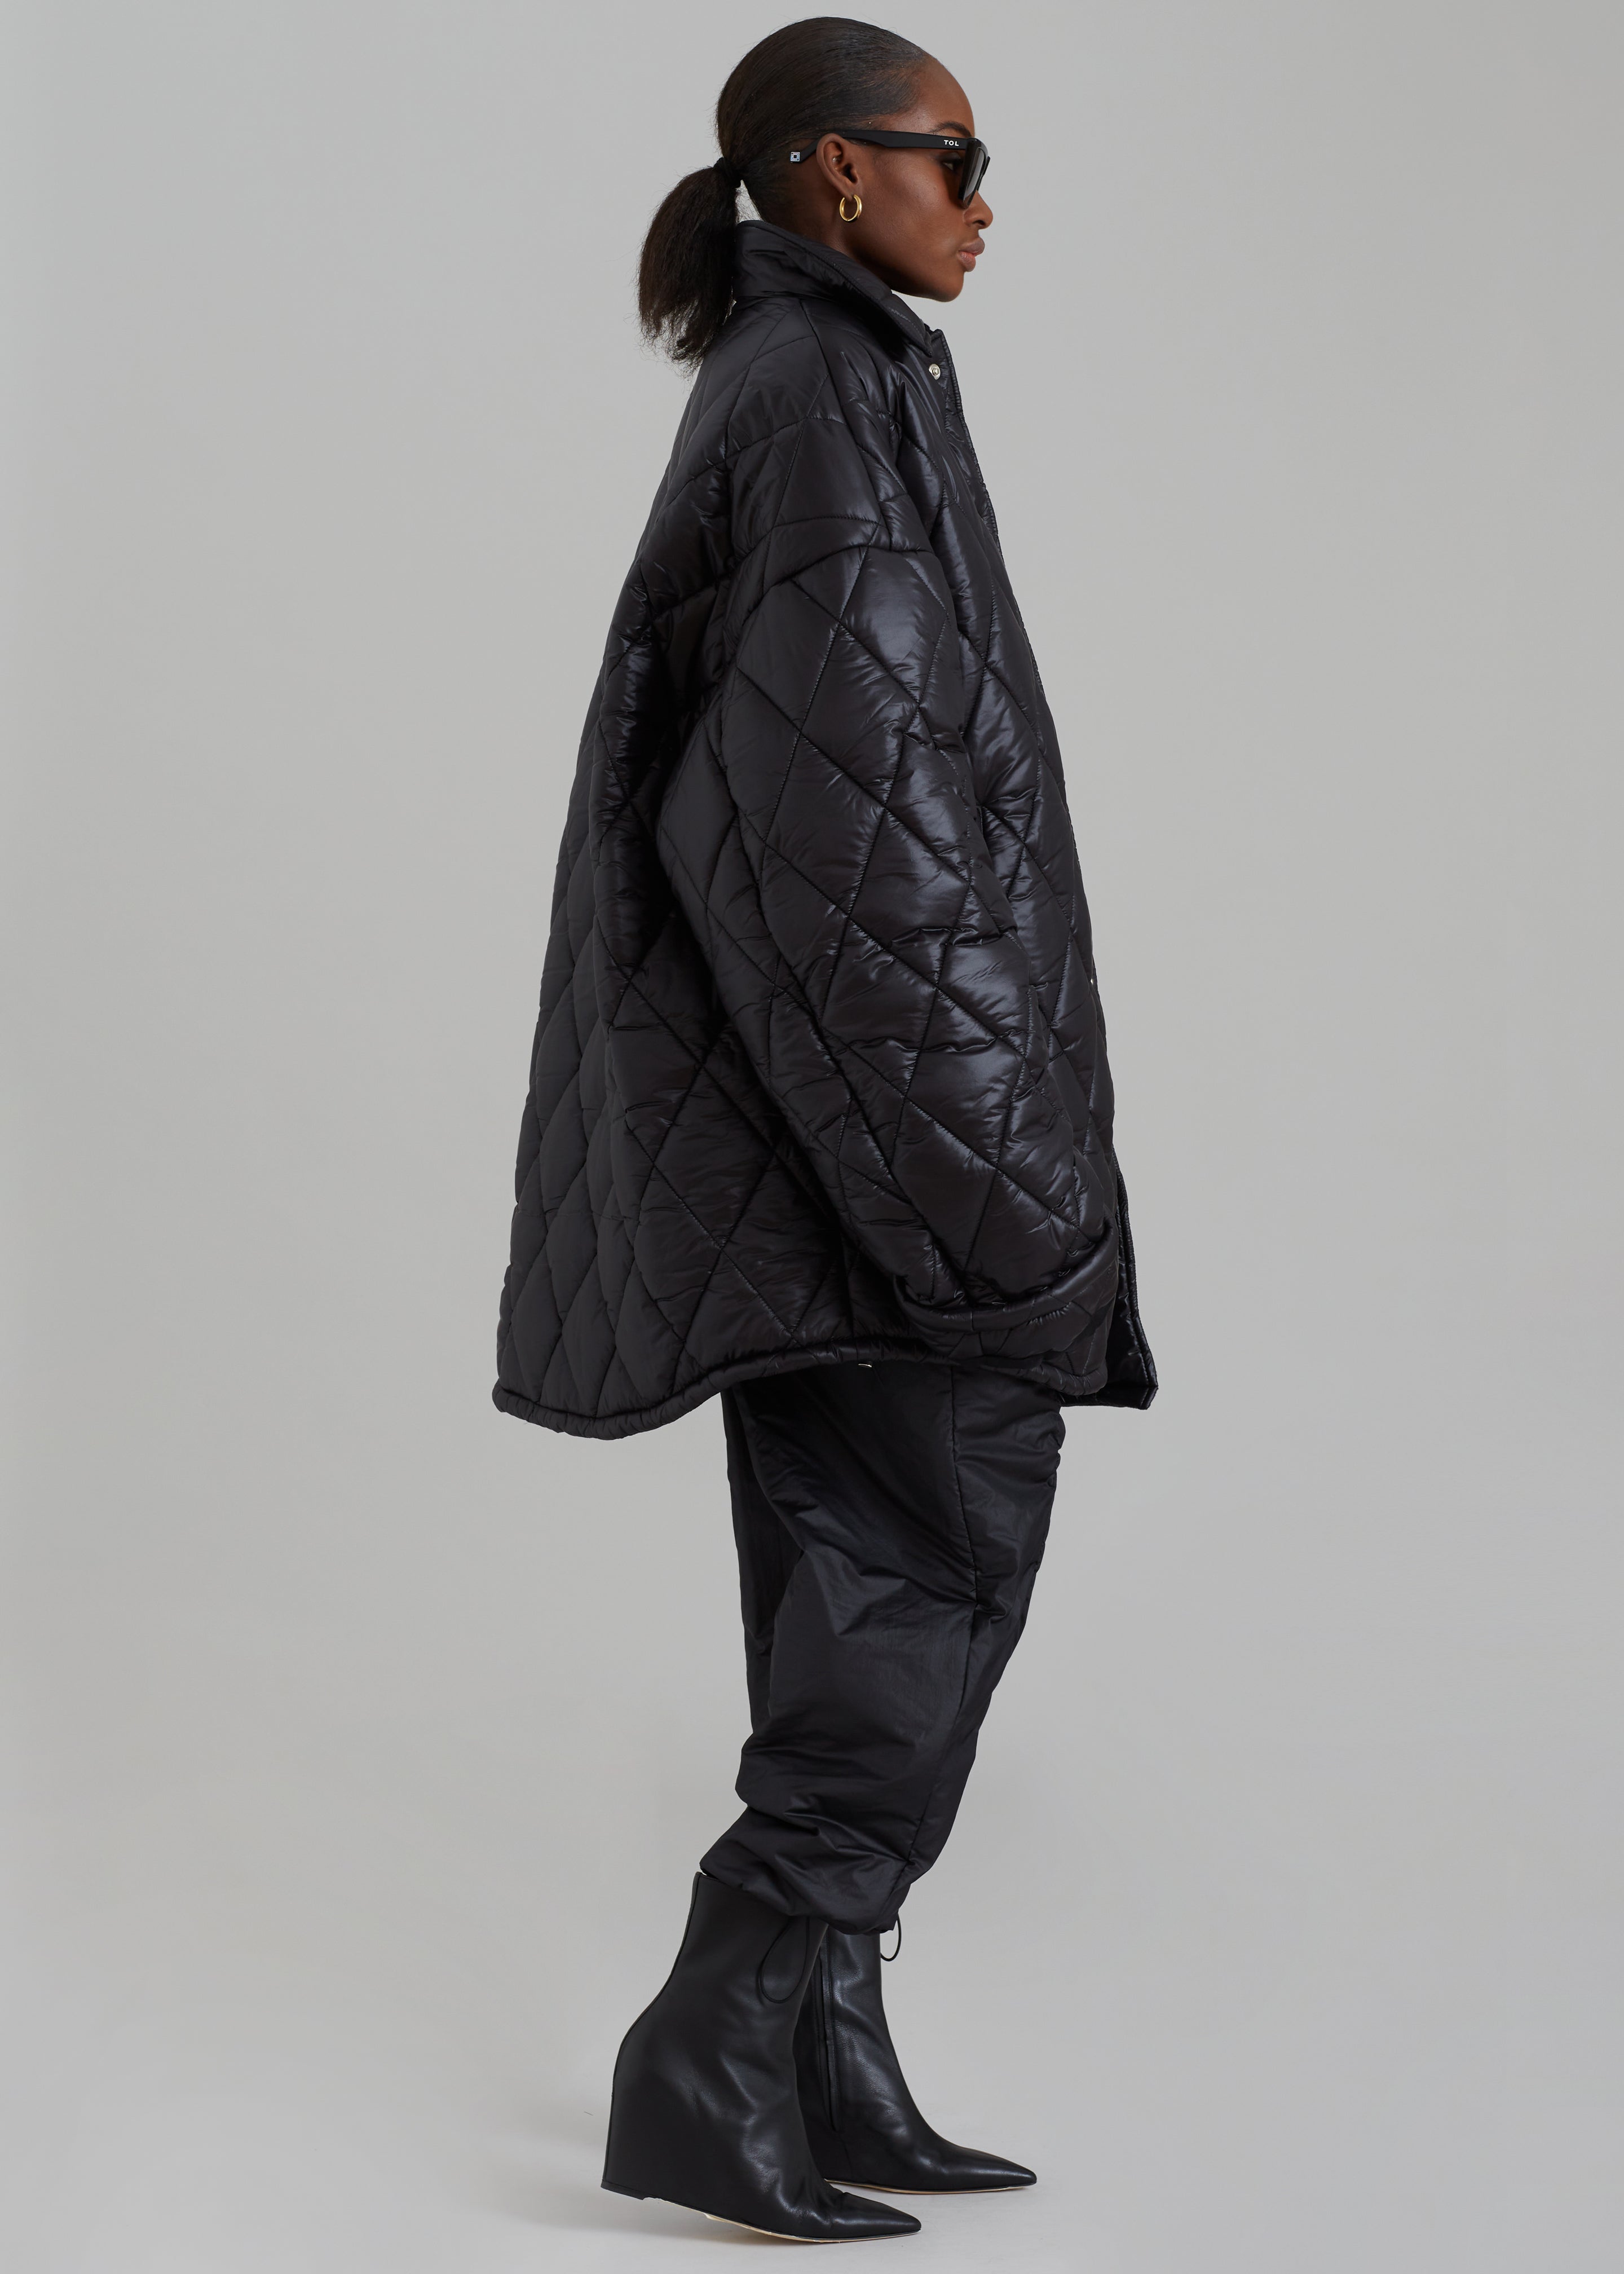 EGONLab Snow Quilted Puffer Jacket - Shiny Black Pl - 8